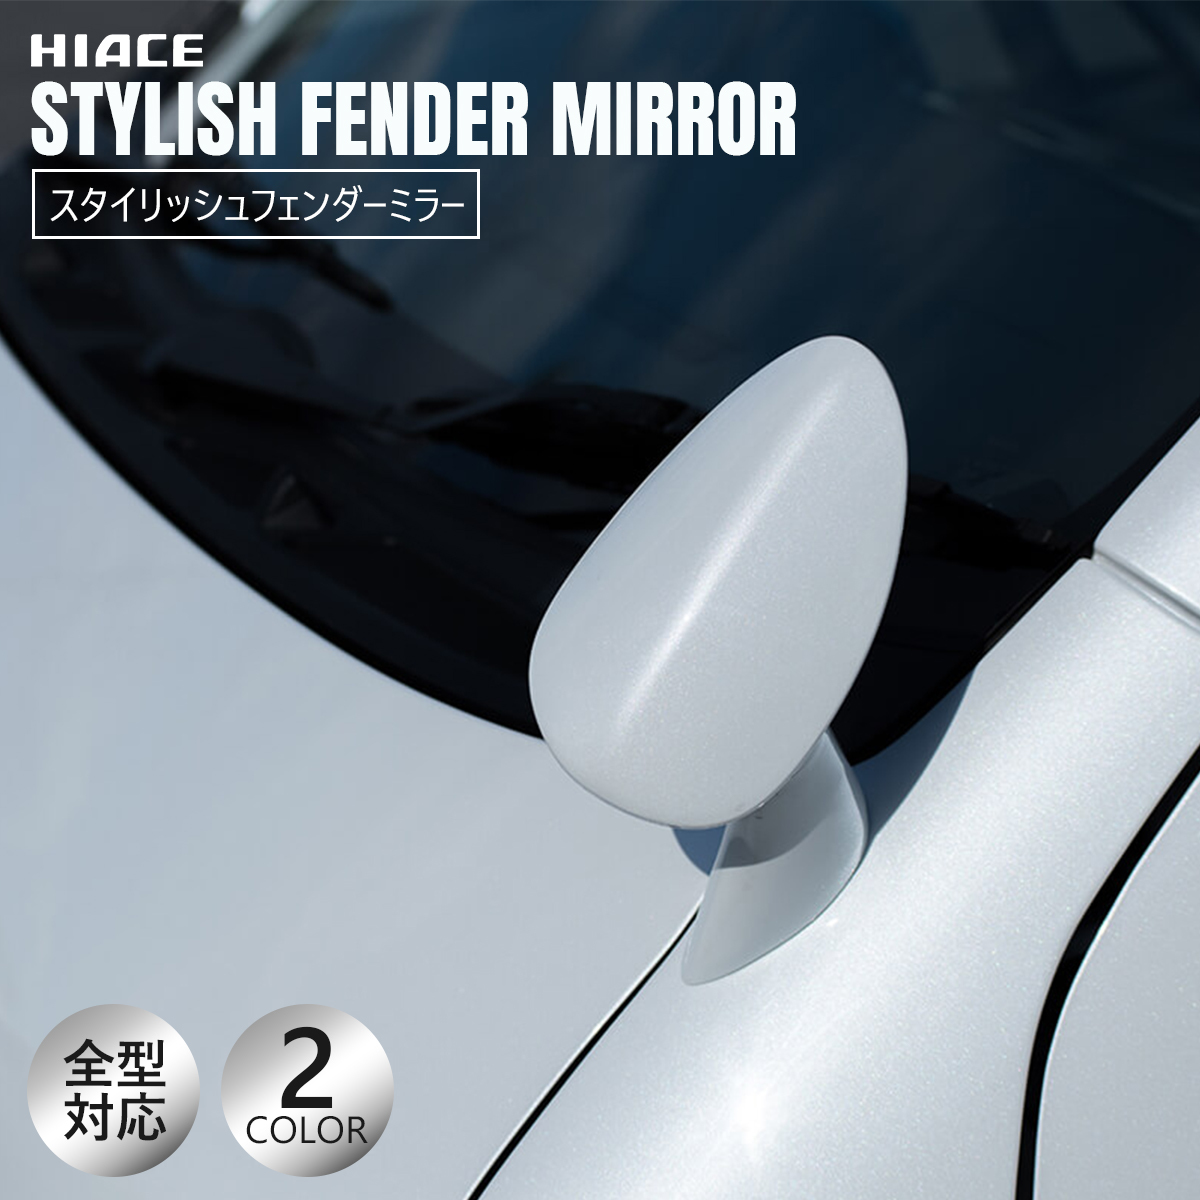  Toyota Hiace stylish fender mirror Hiace 200 series standard * wide common 209 black mica 2